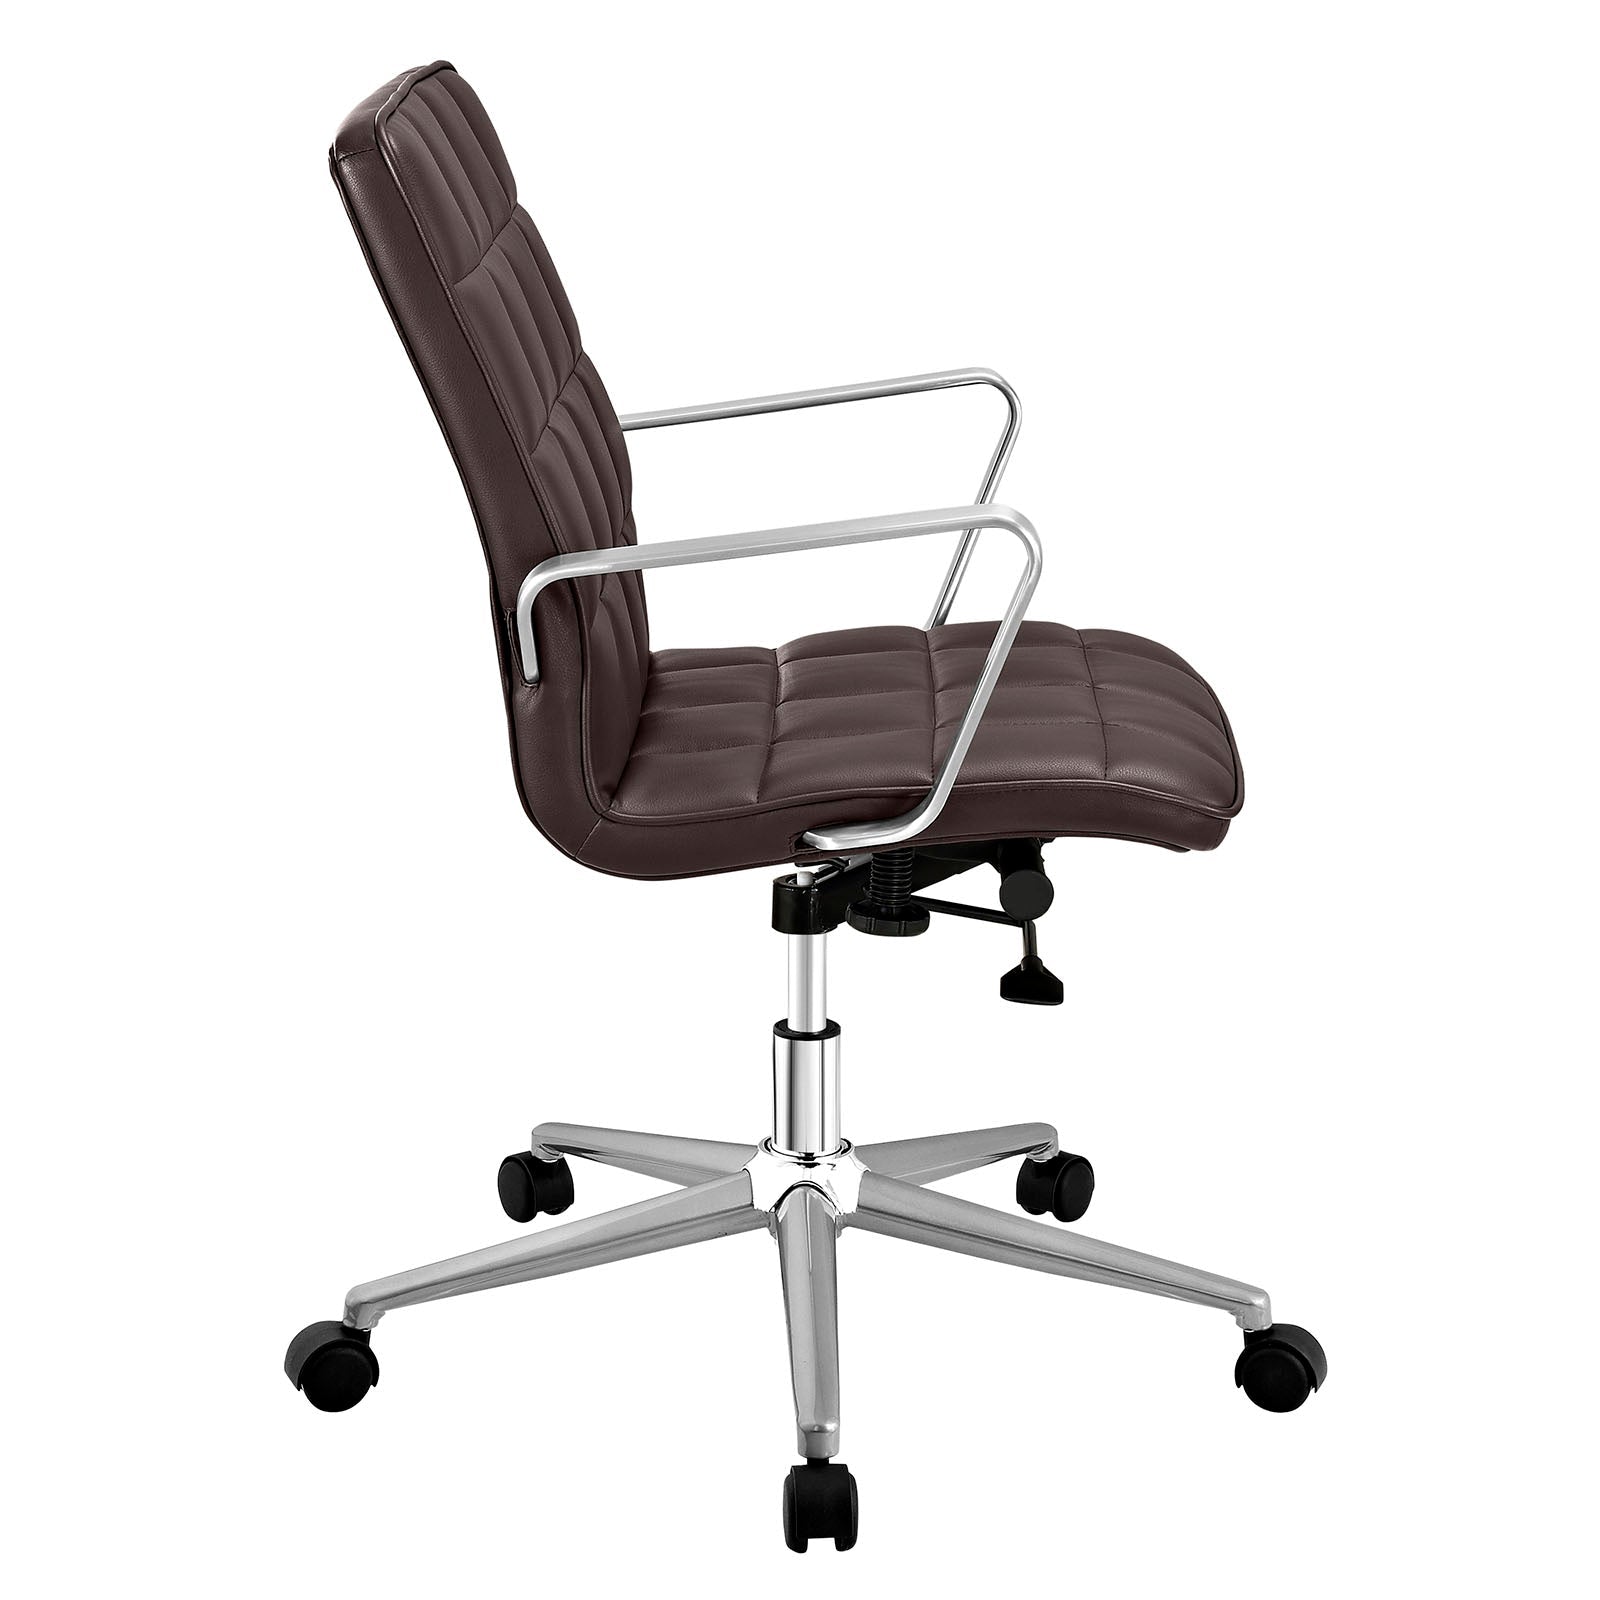 Enterprise Office Chair